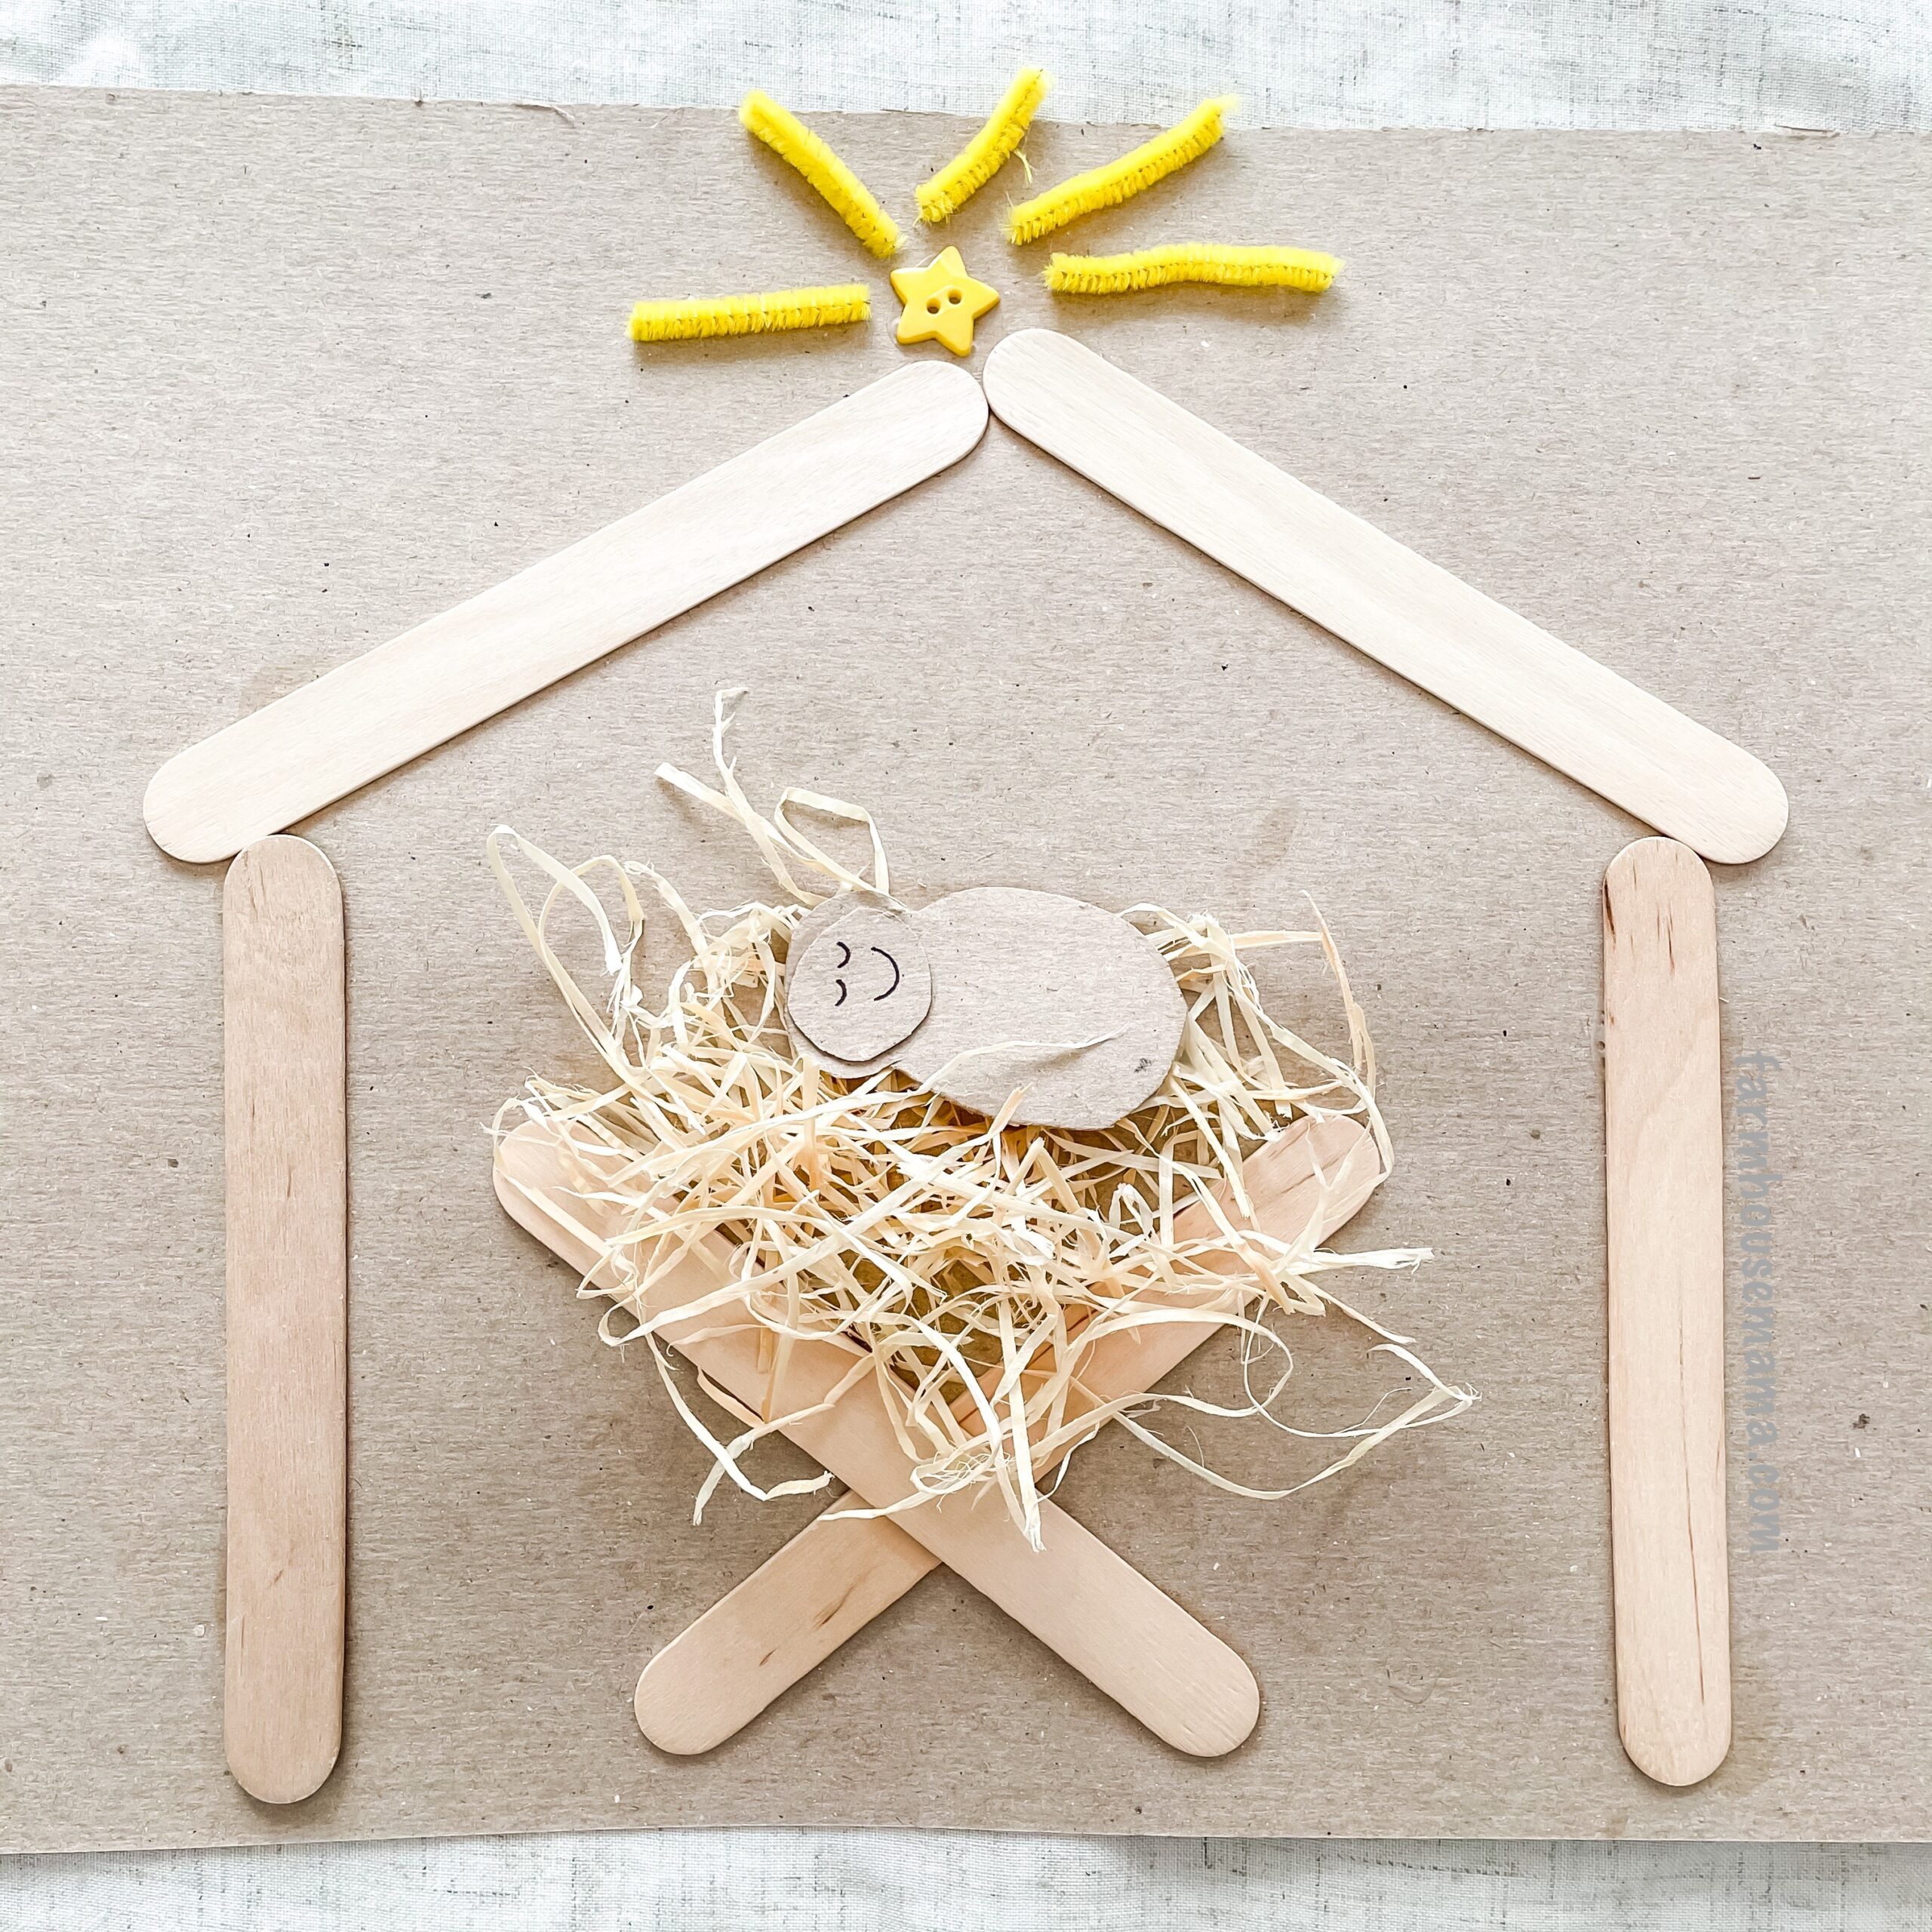 Nativity Crafts For Preschool